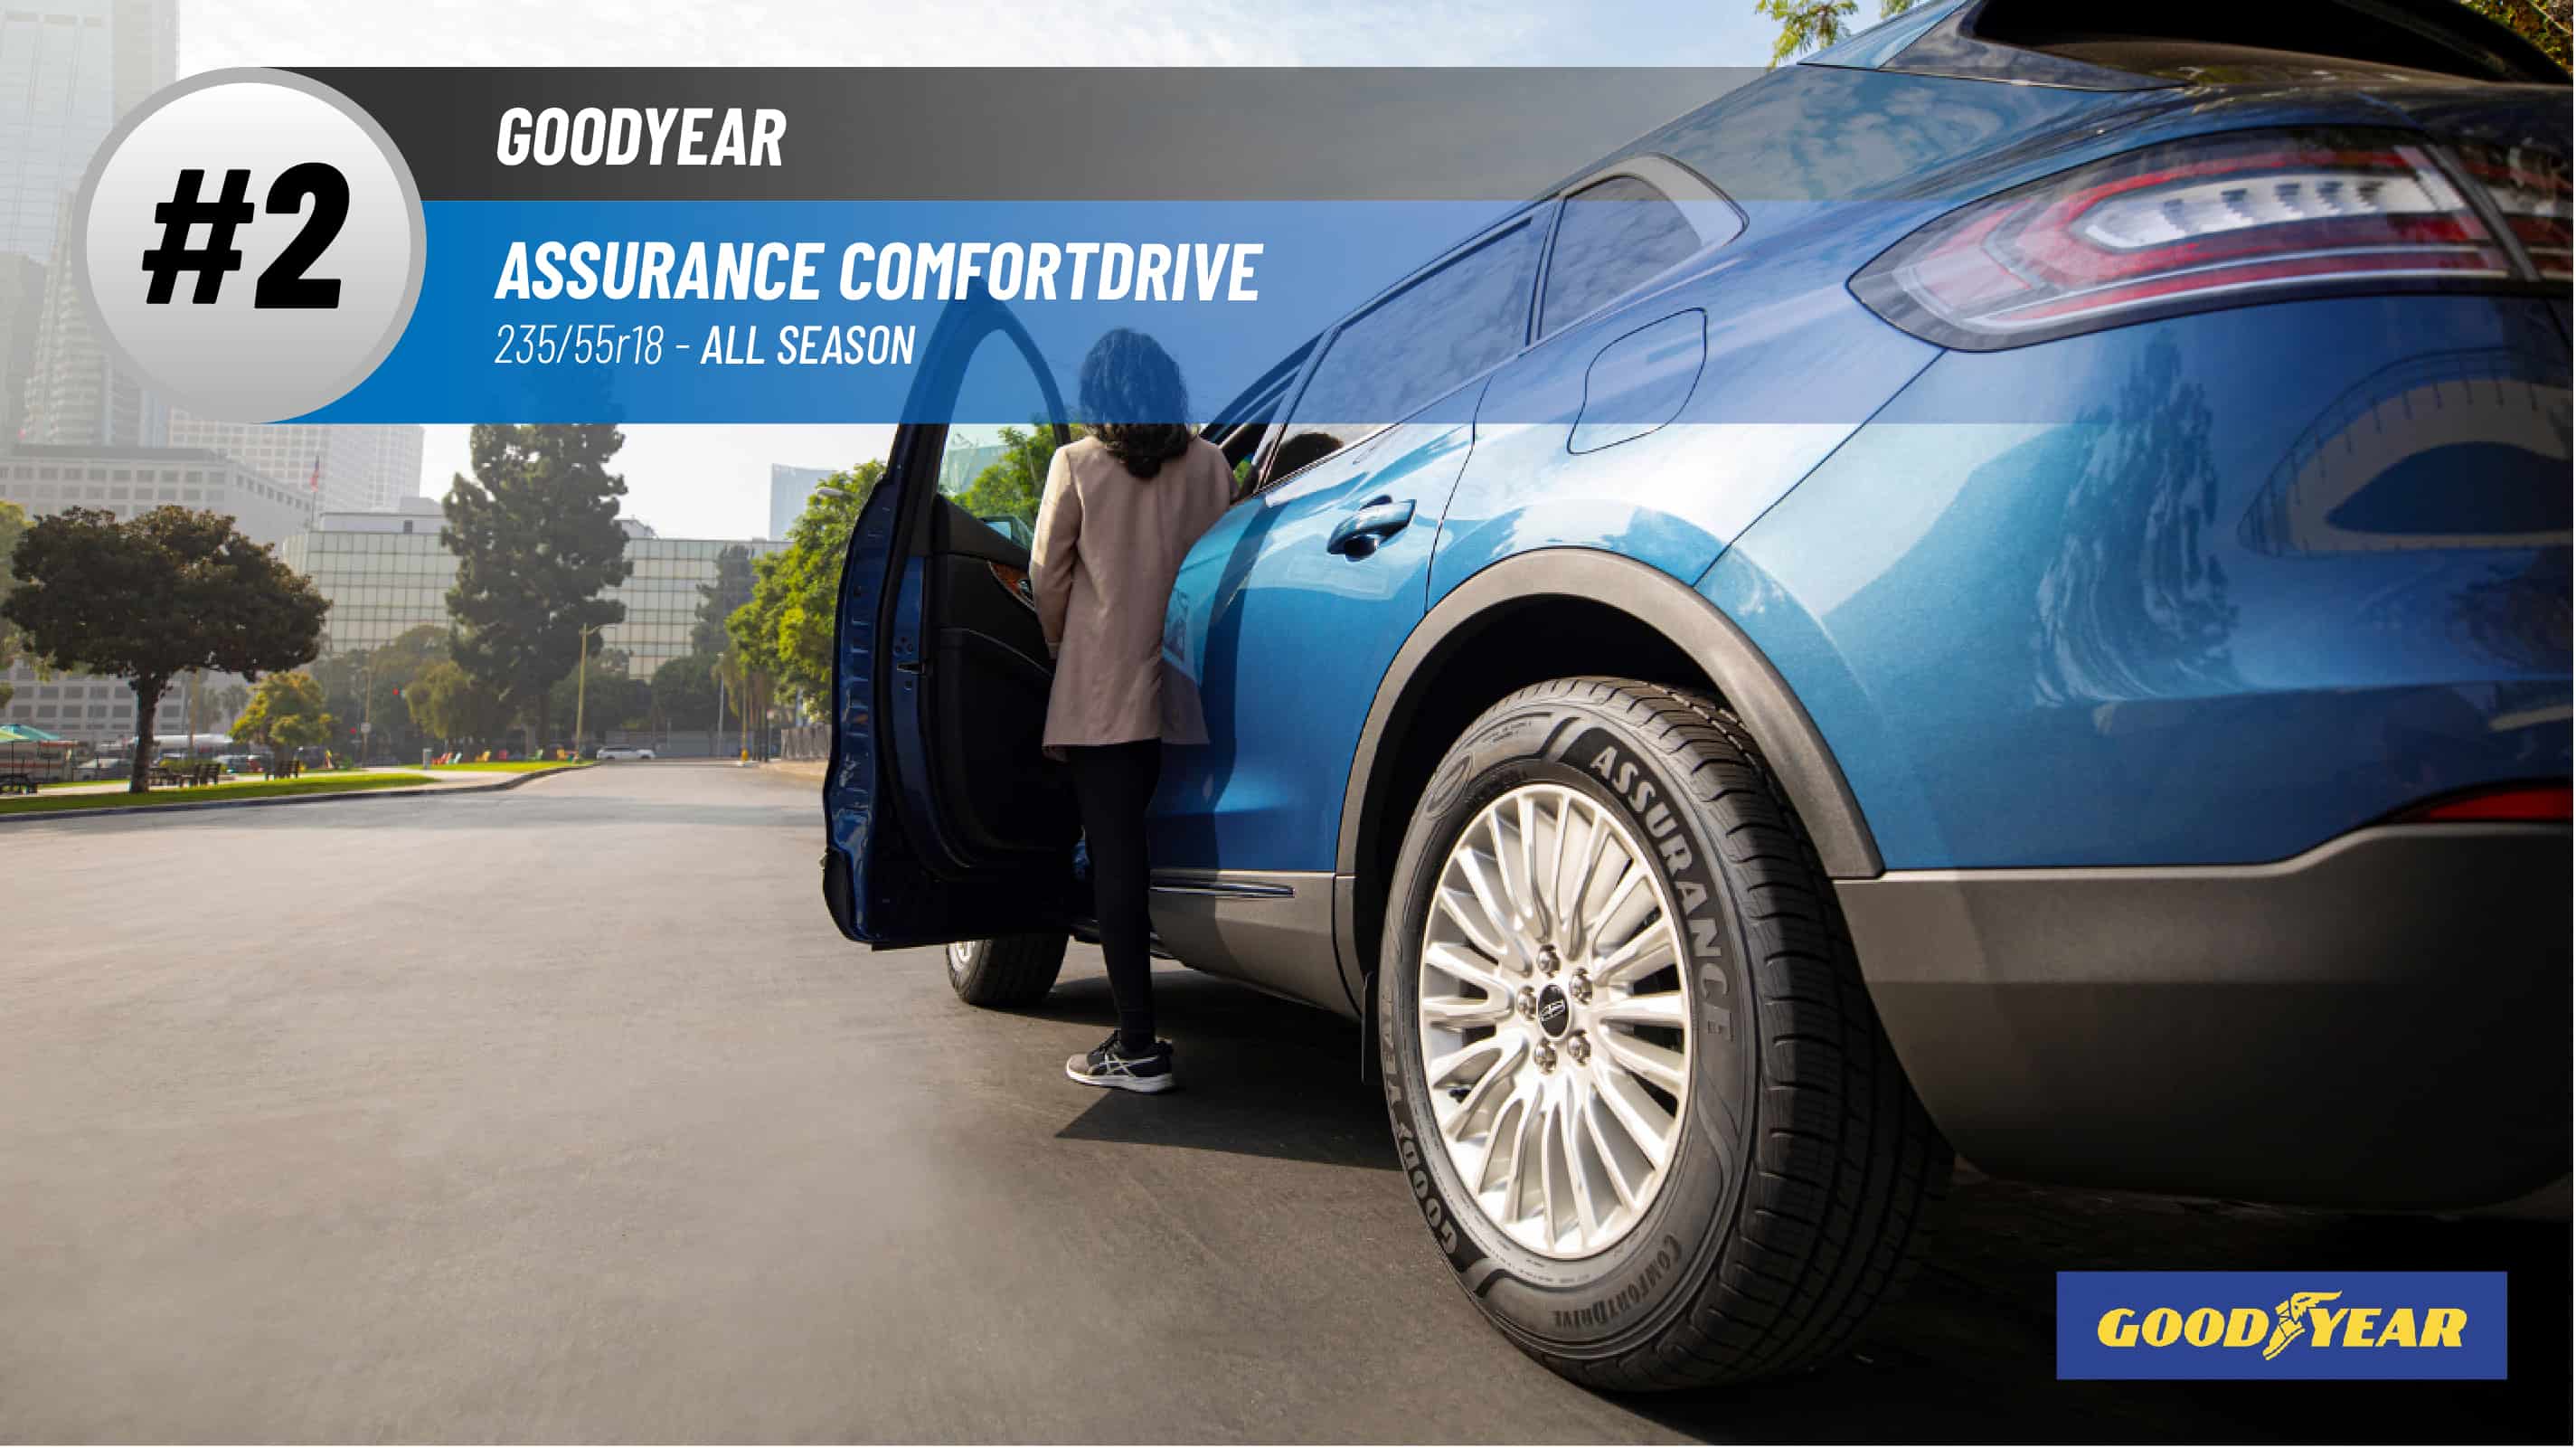 Top #2 All Season Tires: Goodyear Assurance Comfortdrive –best 235/55r18